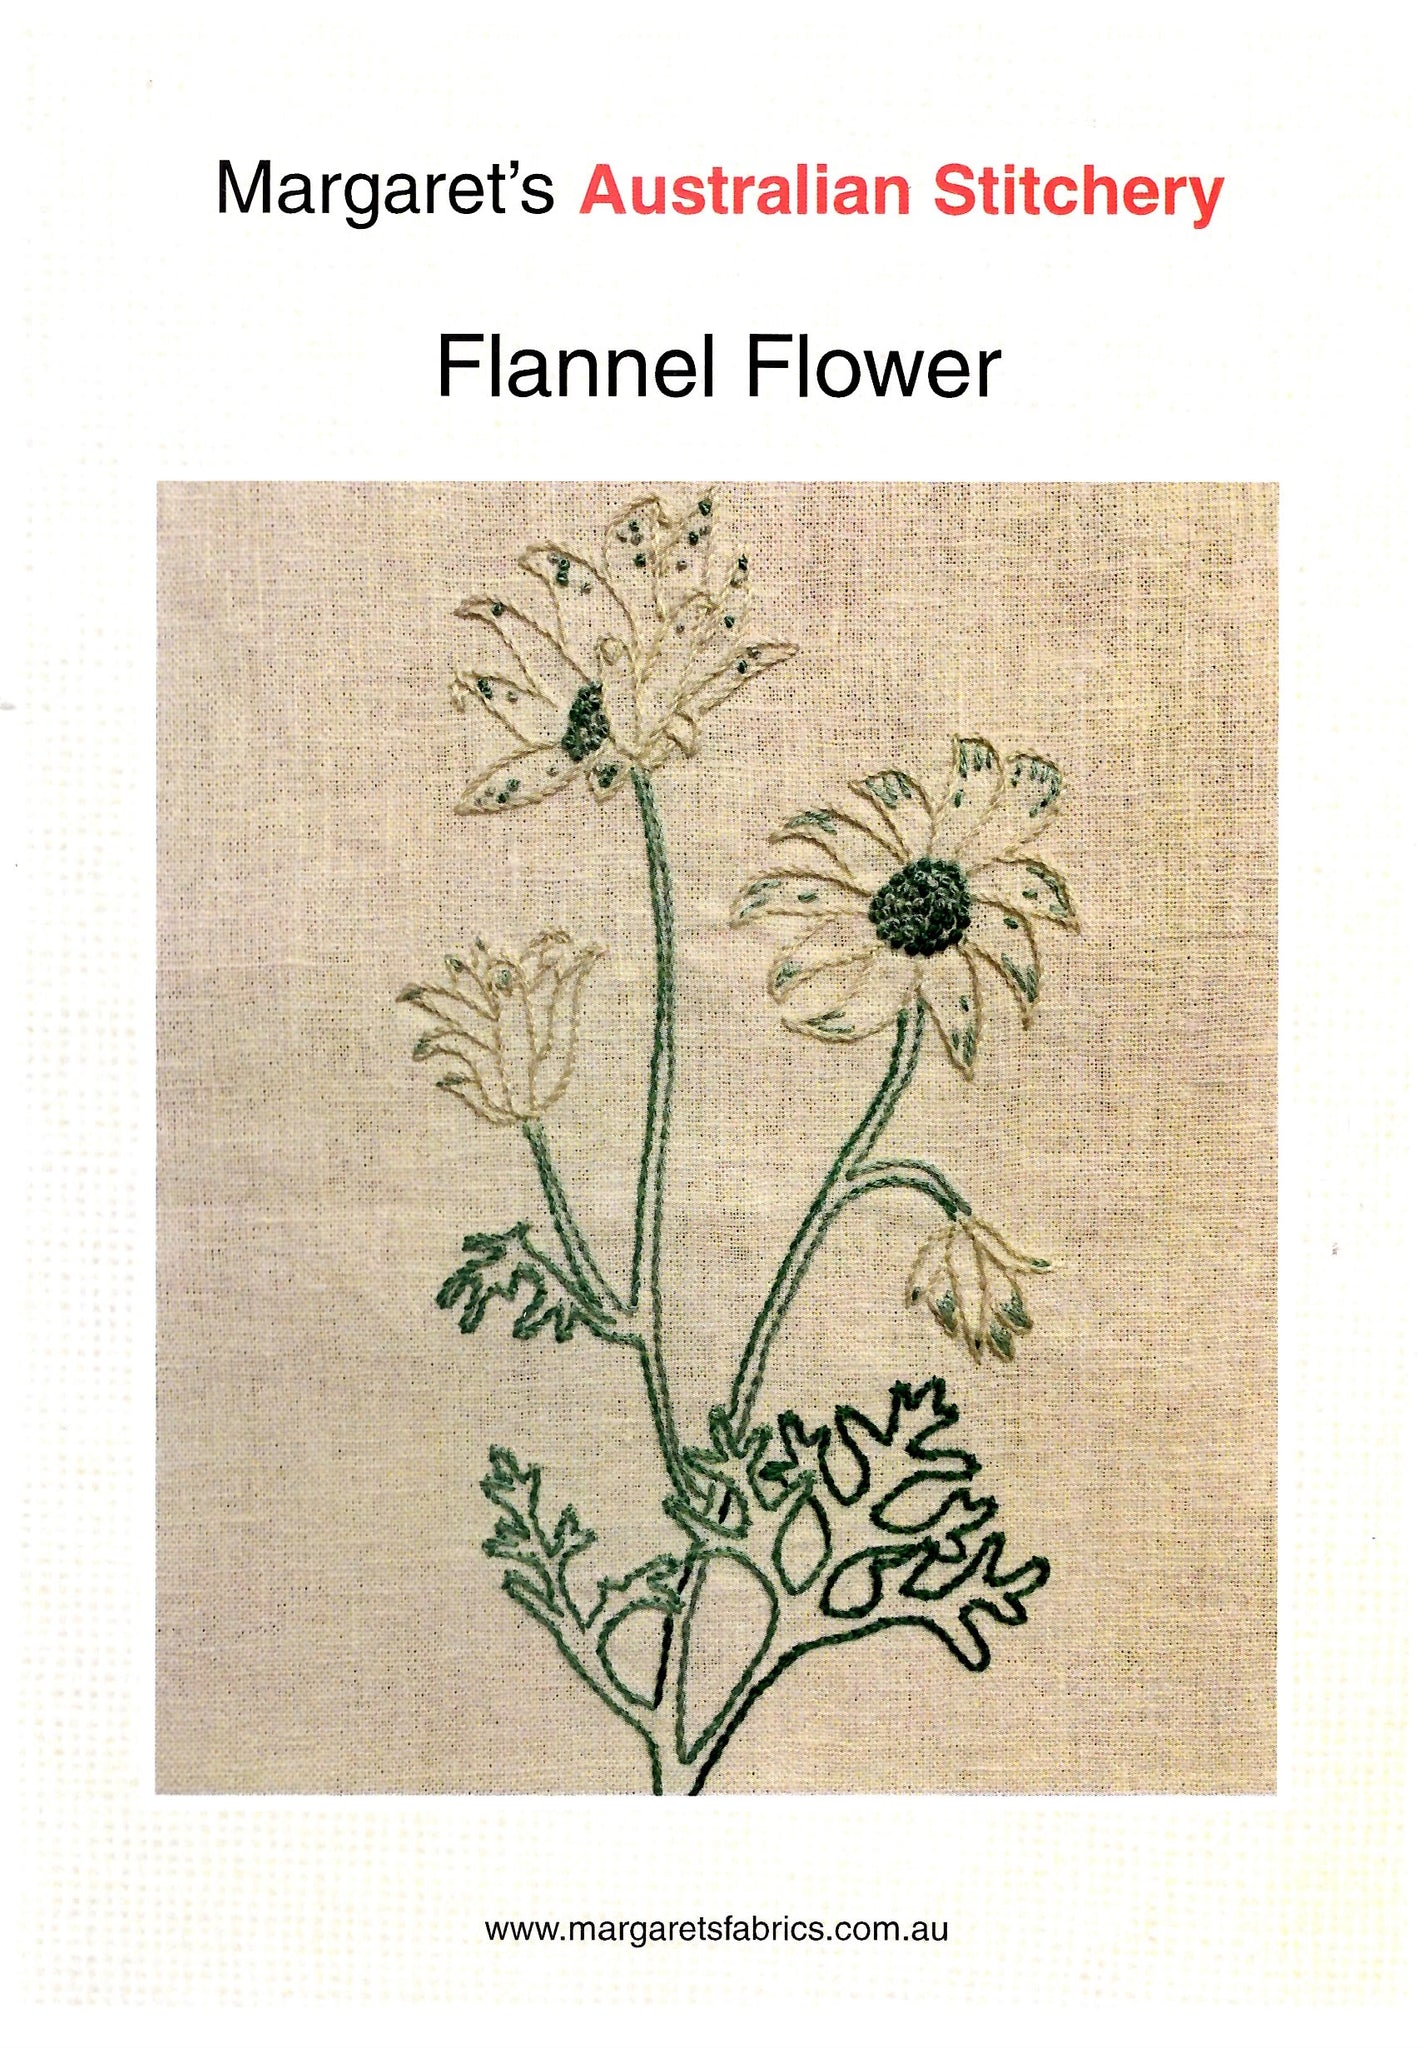 Margaret's Fabrics - Australian Stitchery - Flannel Flower